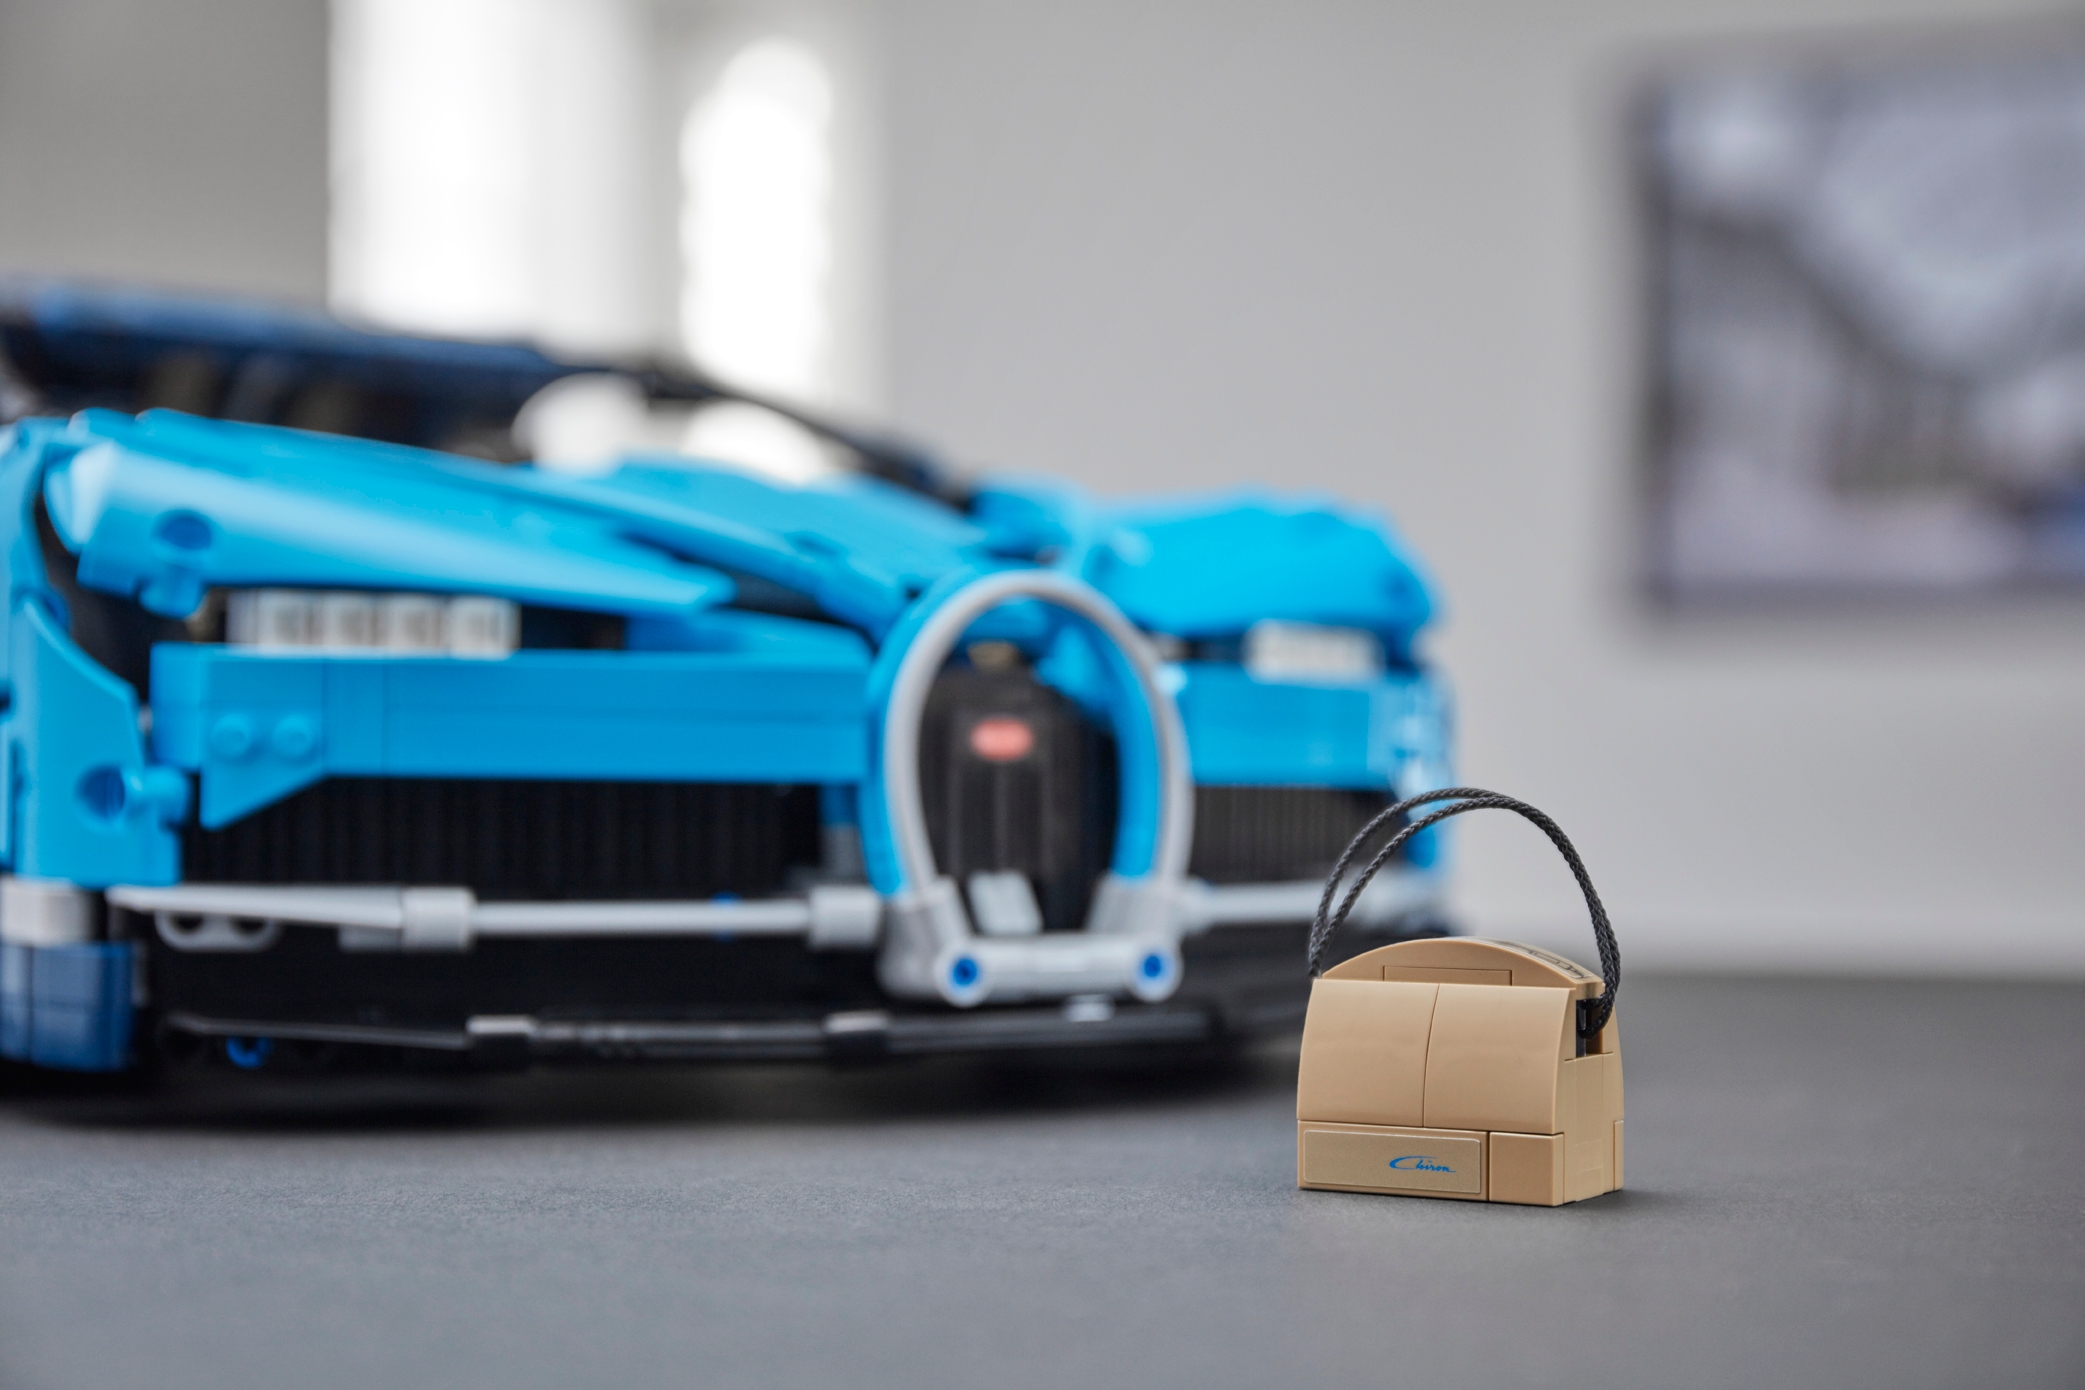 LEGO Technic 42083 - Bugatti Chiron Jeu de Construction (3599